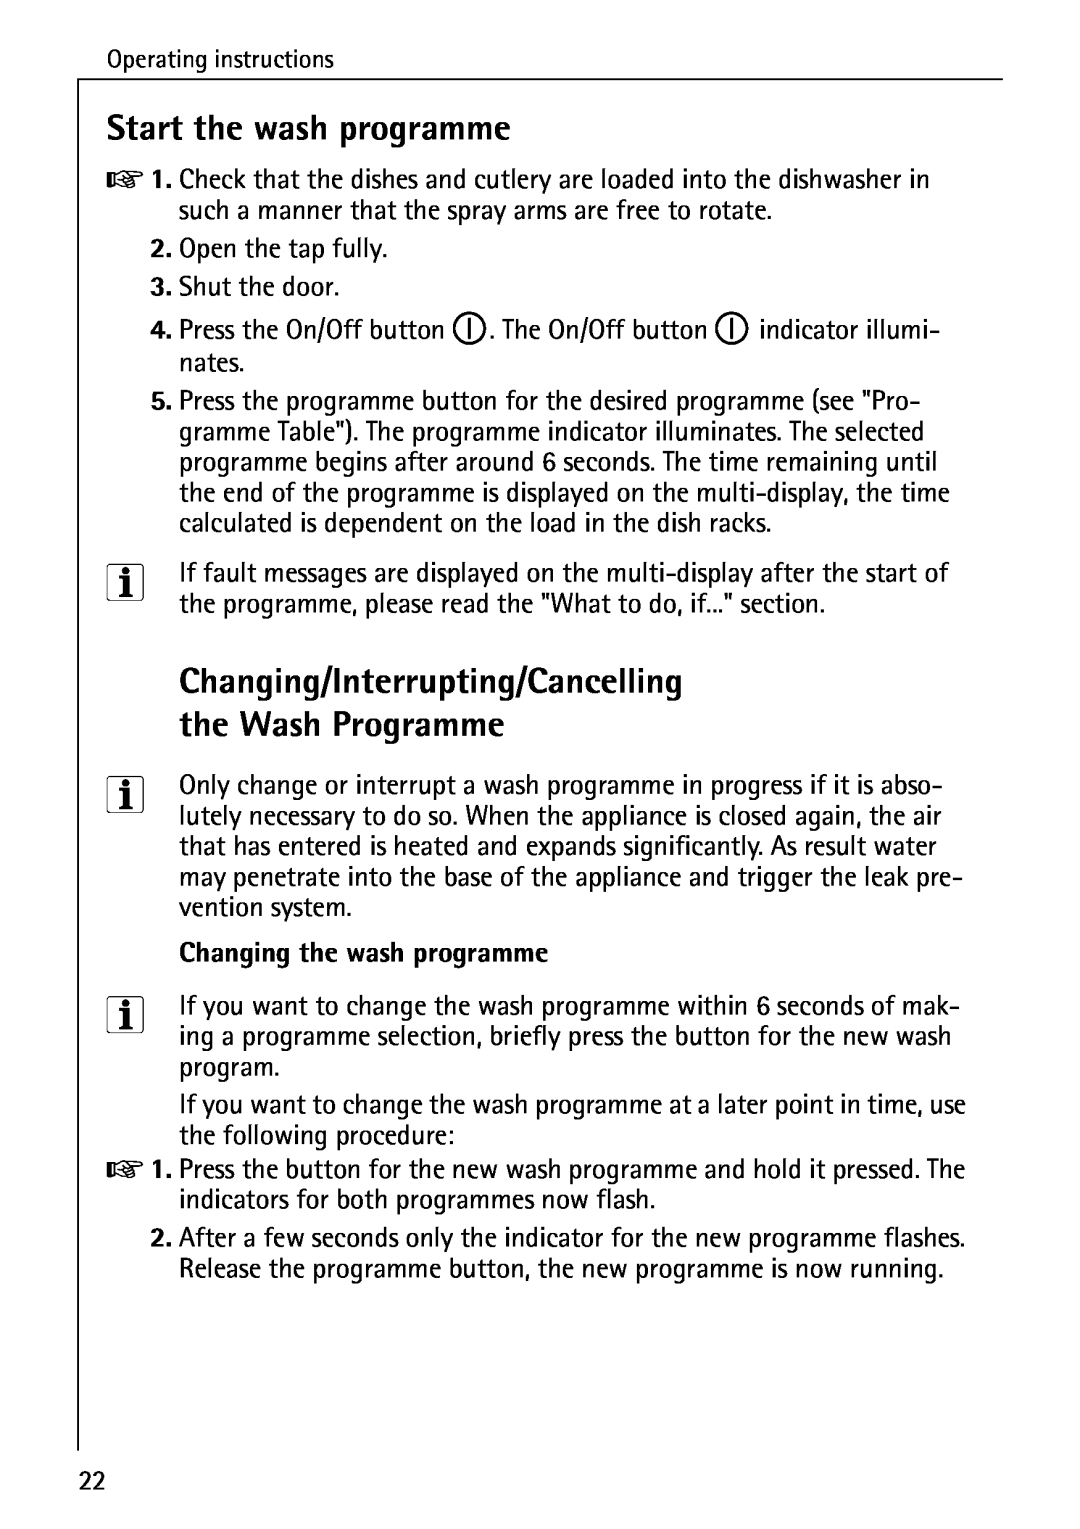 AEG 5071 manual Start the wash programme, Changing/Interrupting/Cancelling the Wash Programme, Changing the wash programme 